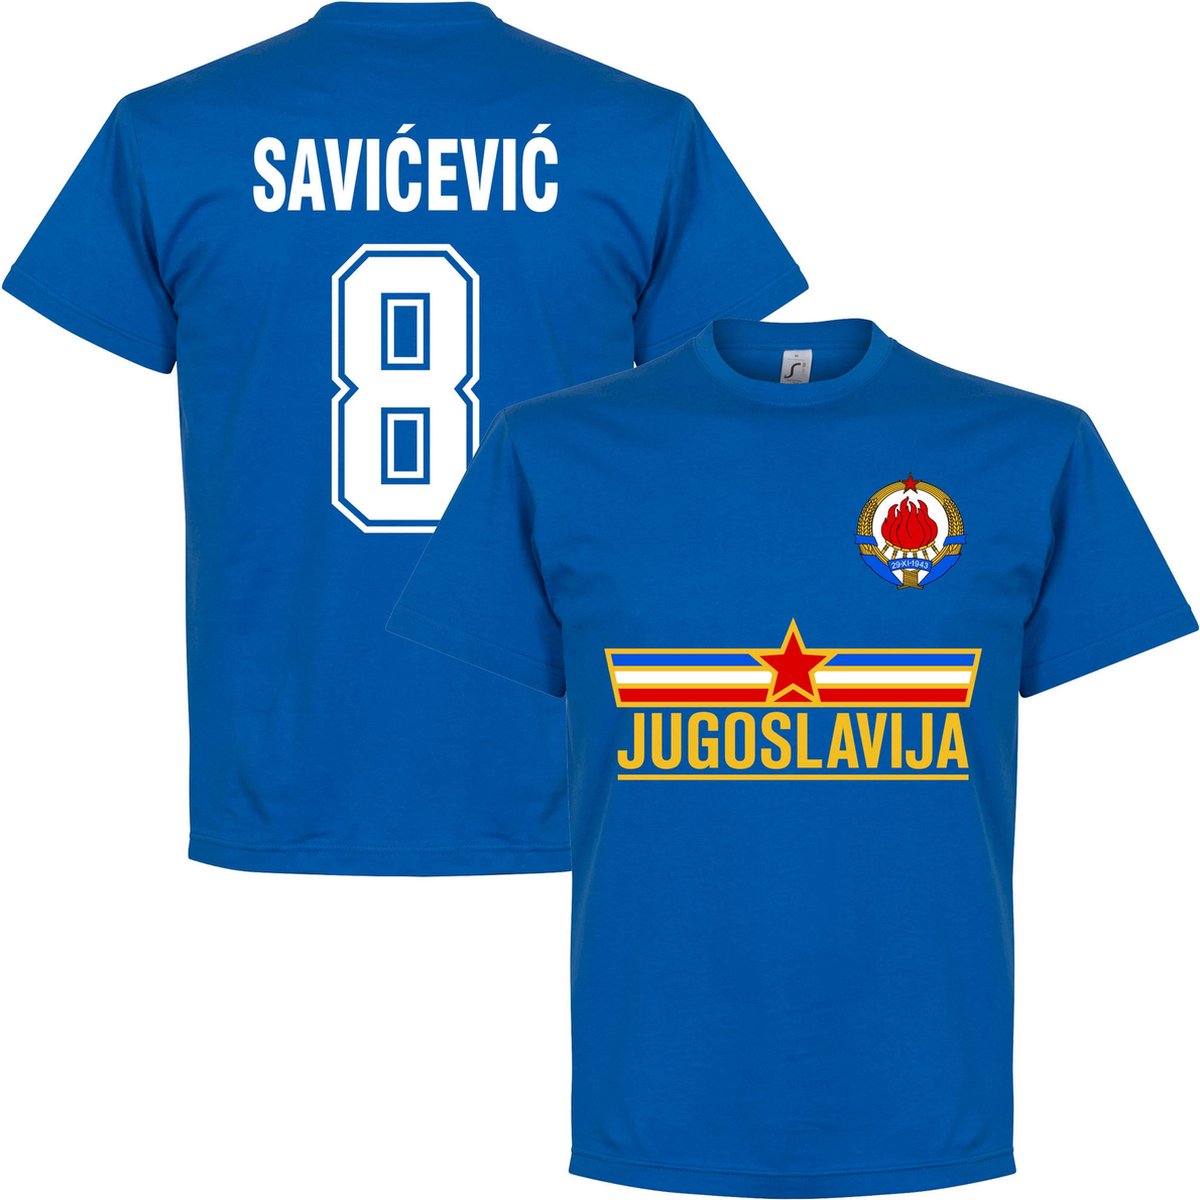 Joegoslavië Savicevic Team T-shirt - XXL